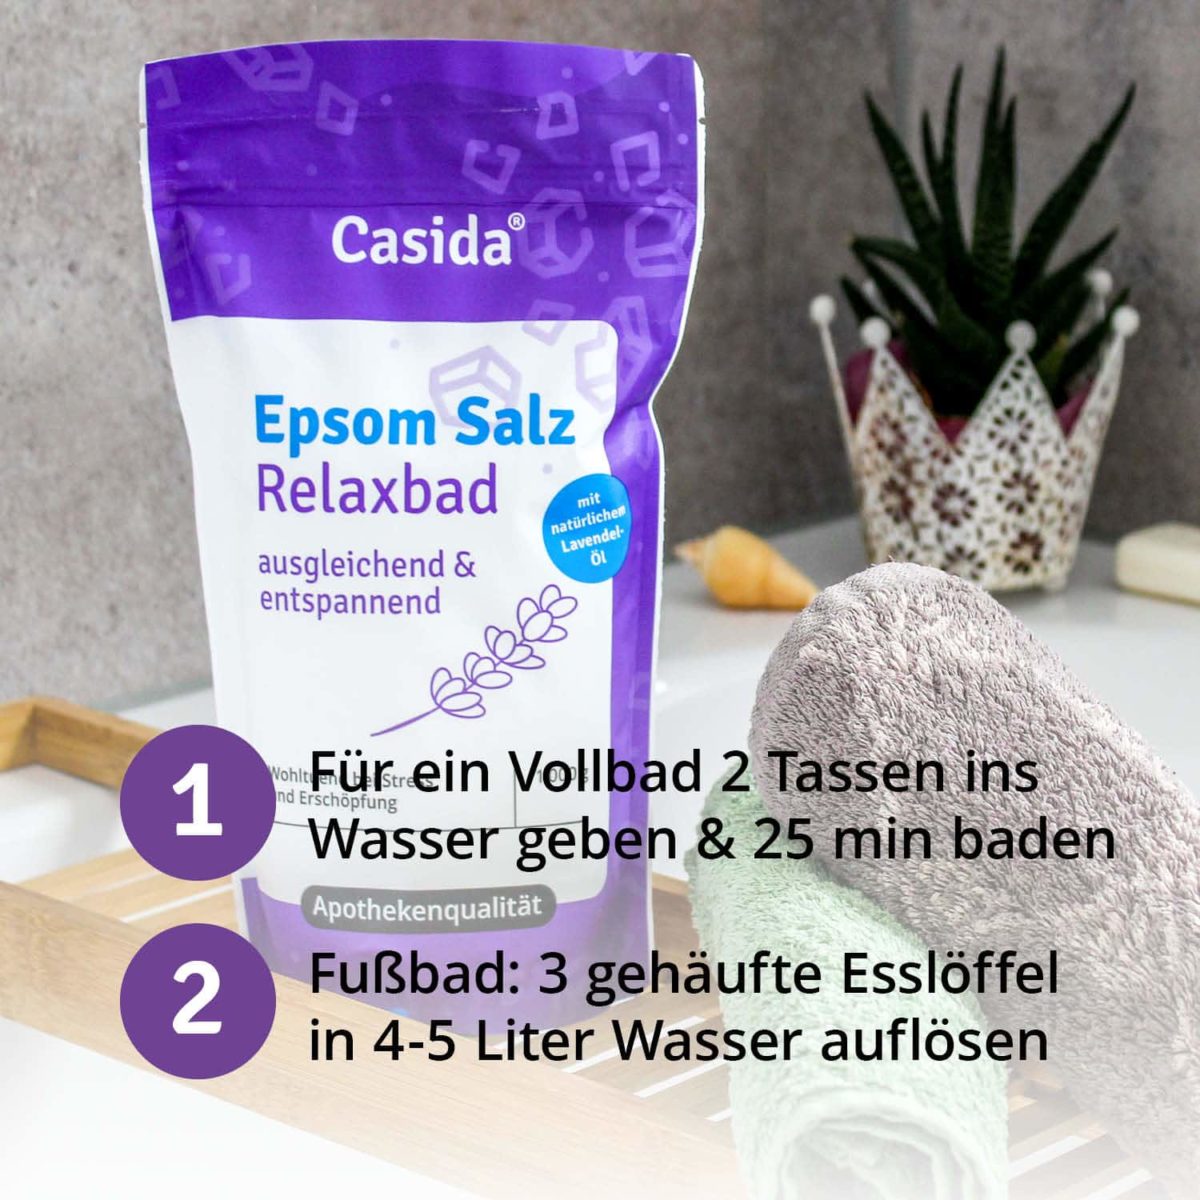 Casida Epsom Salz Relaxbad mit Lavendel 1 kg 12903730 PZN Apotheke Entspannung Bittersalz6